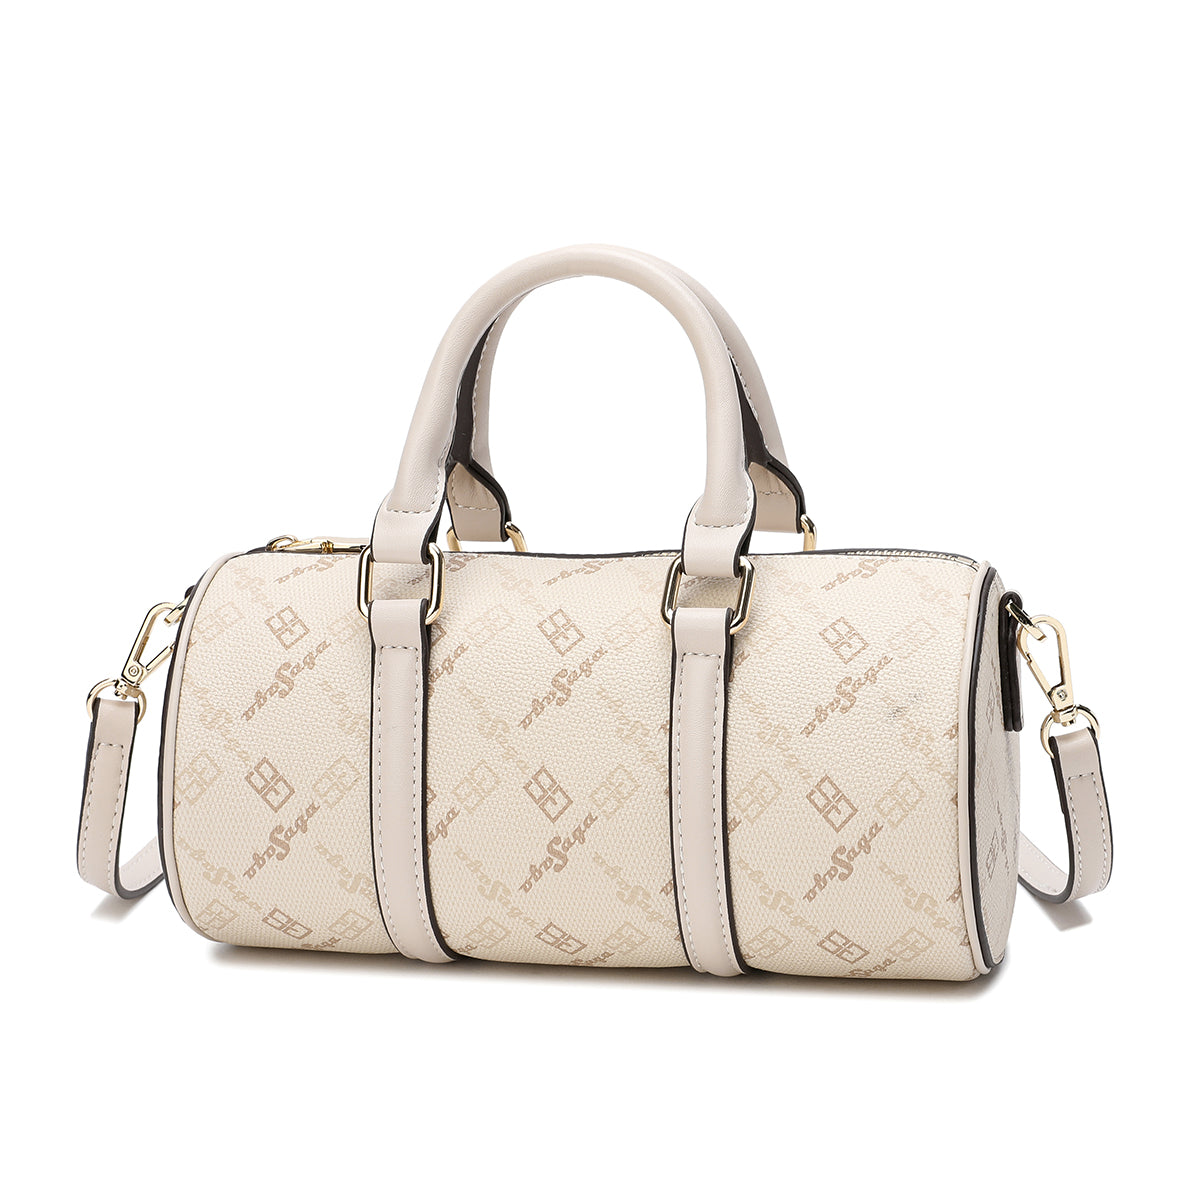 An elegant bag with a long shoulder strap, width 22 cm, brown or cream color